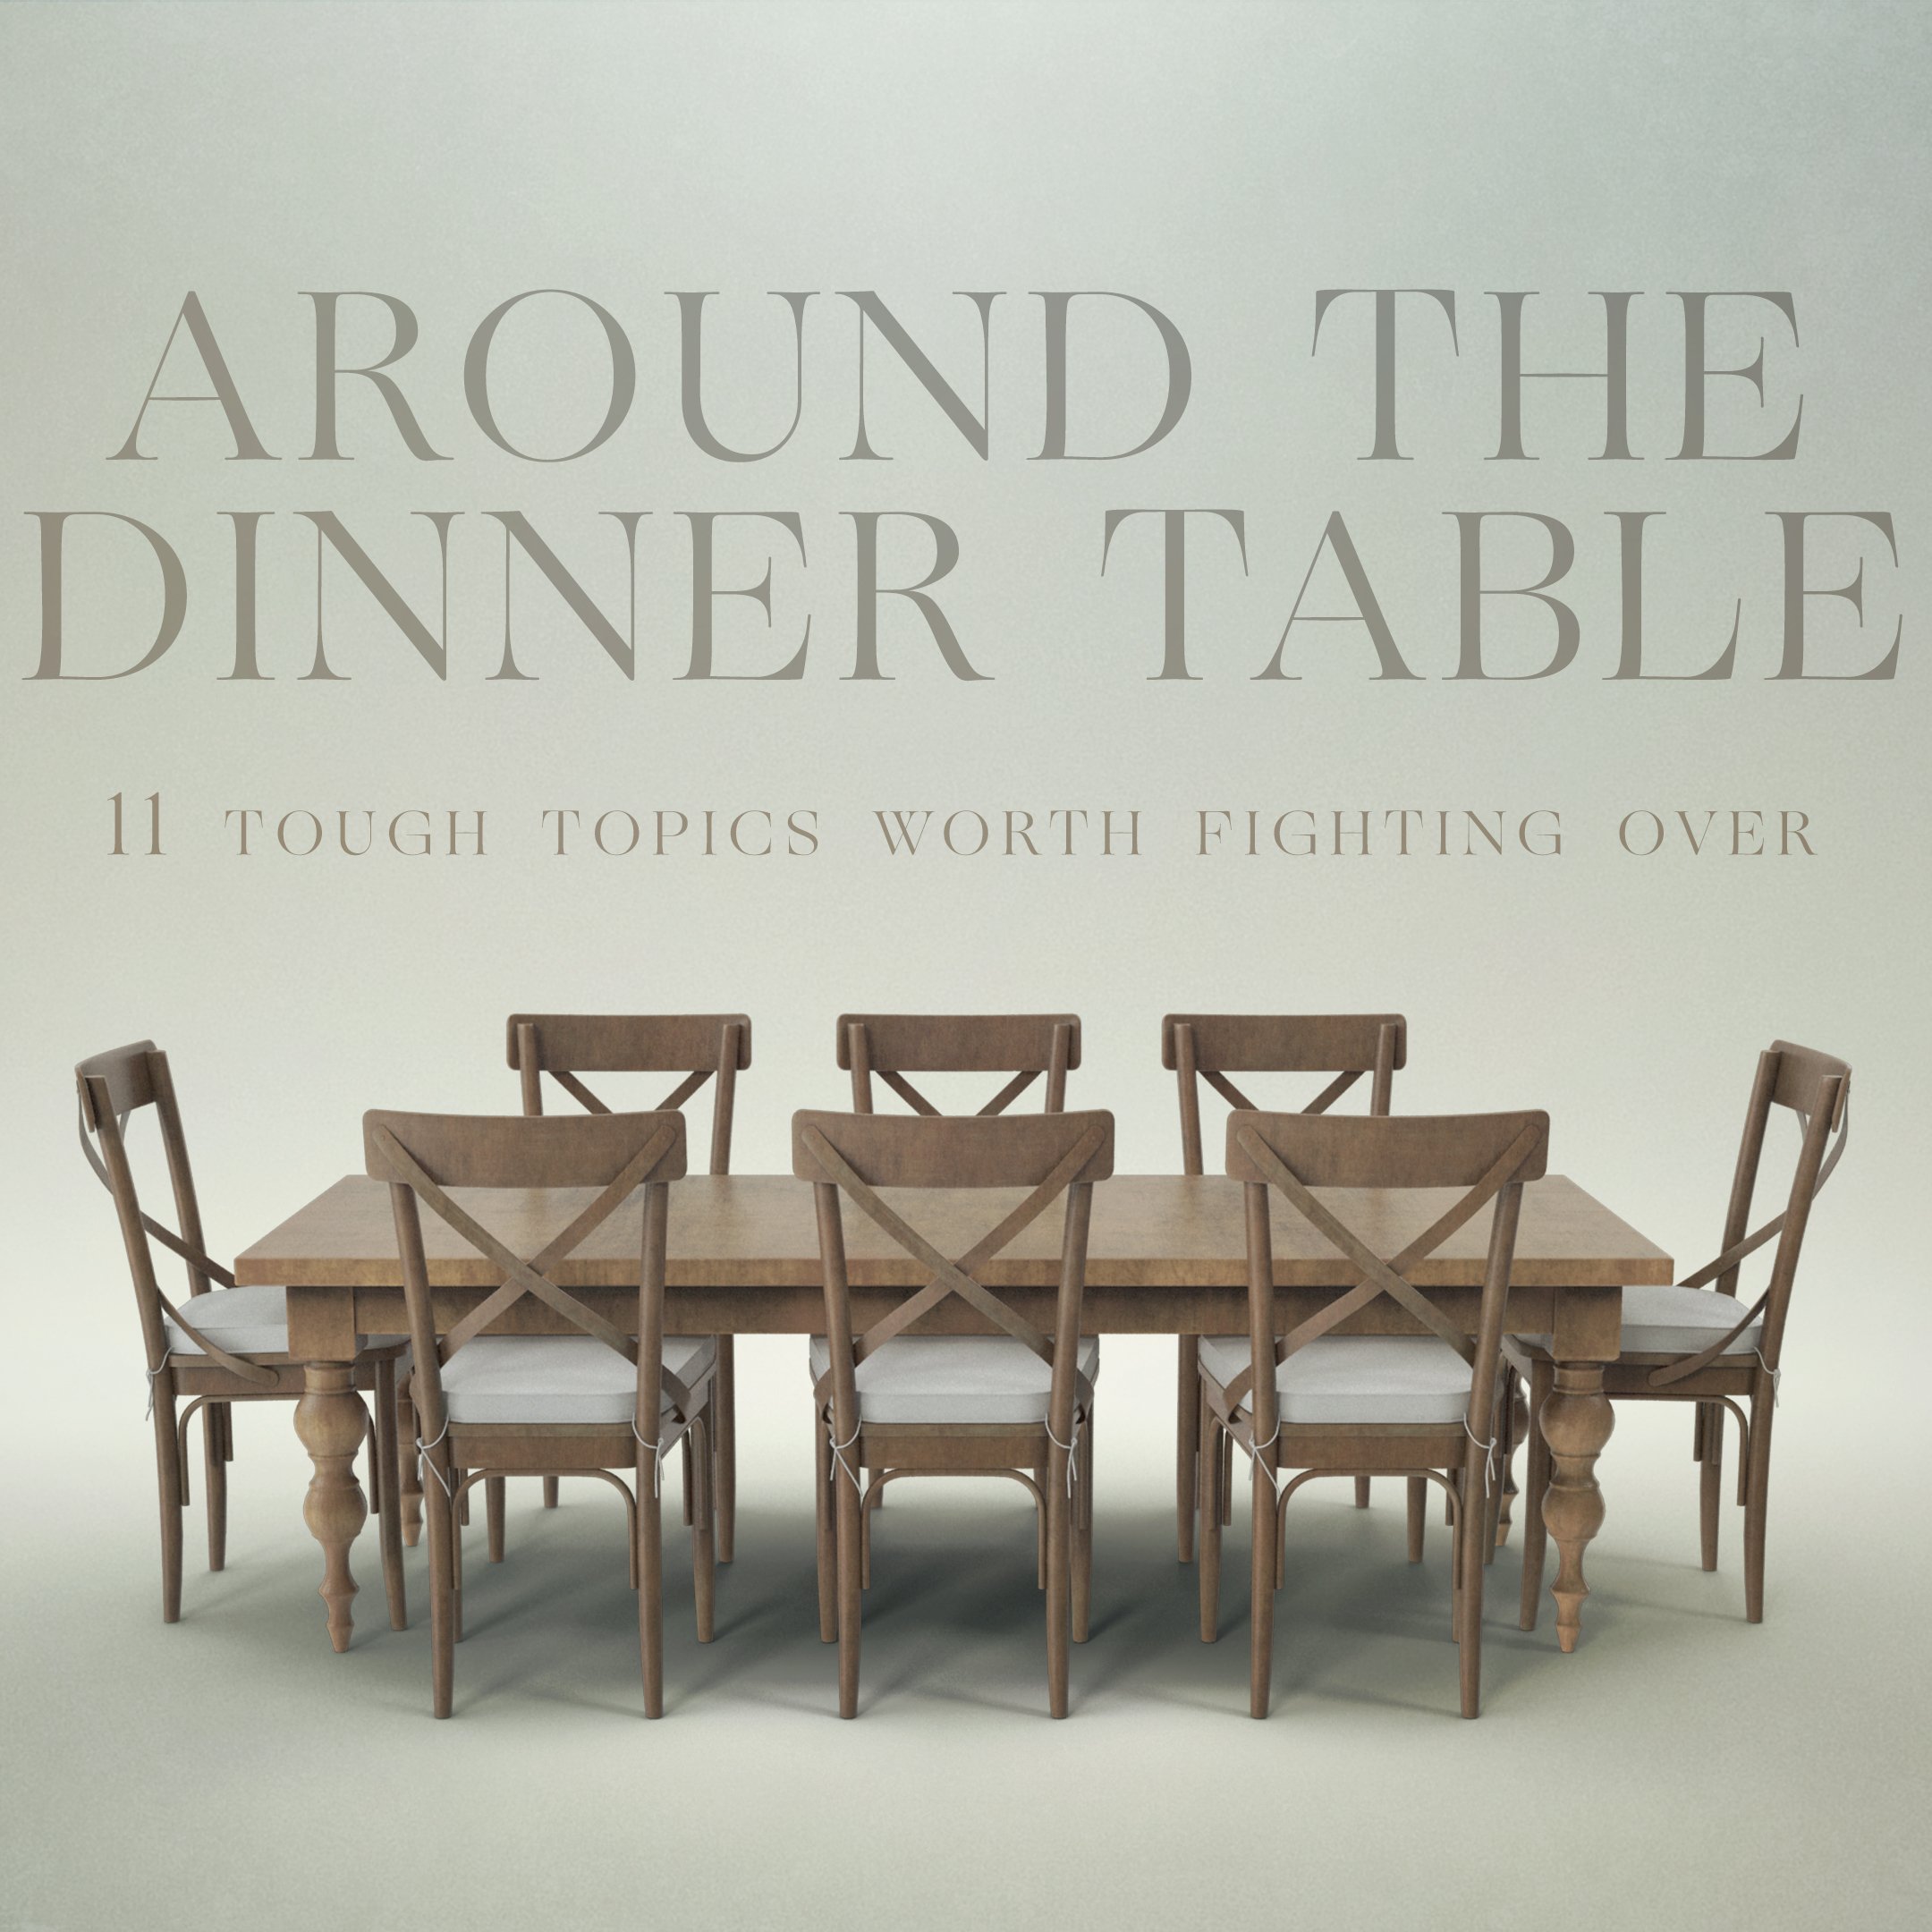 Around the table-square.jpg